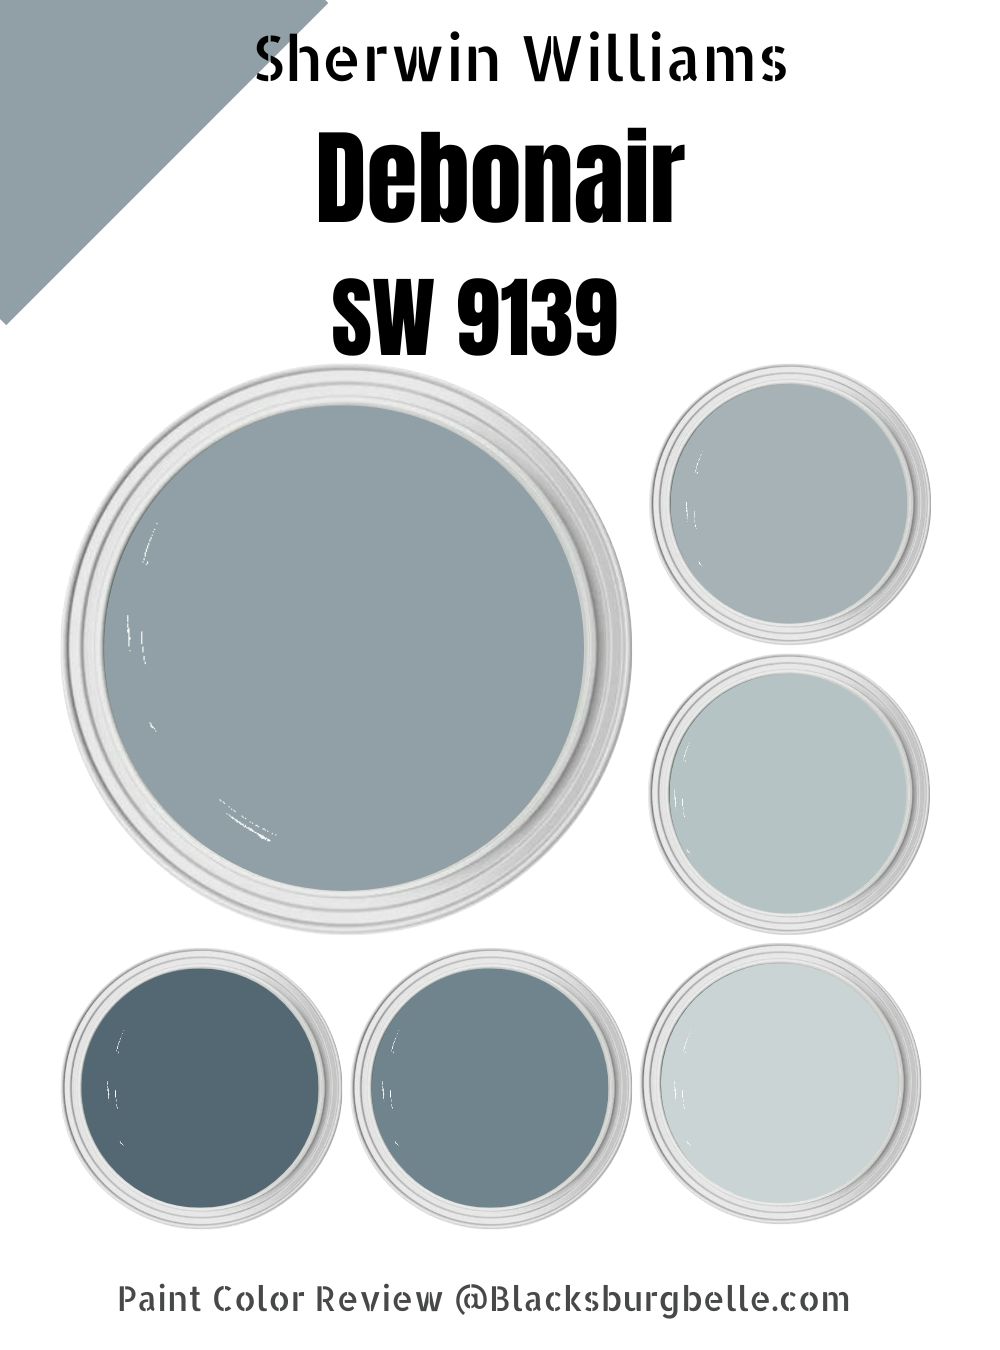 Sherwin Williams Debonair (SW 9139) Paint Color Review